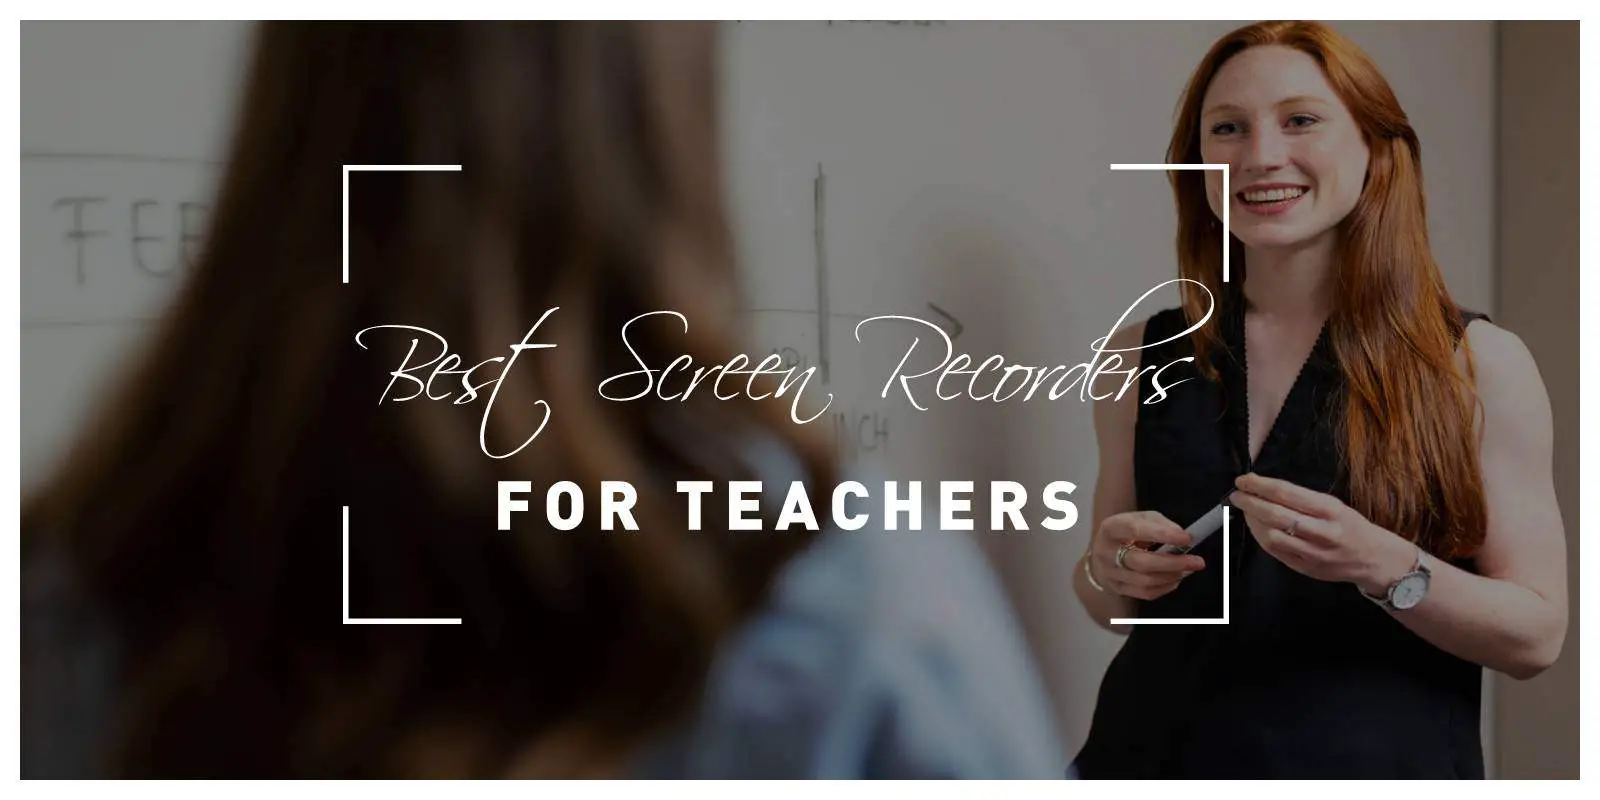 Best Screen Recorders for Teachers